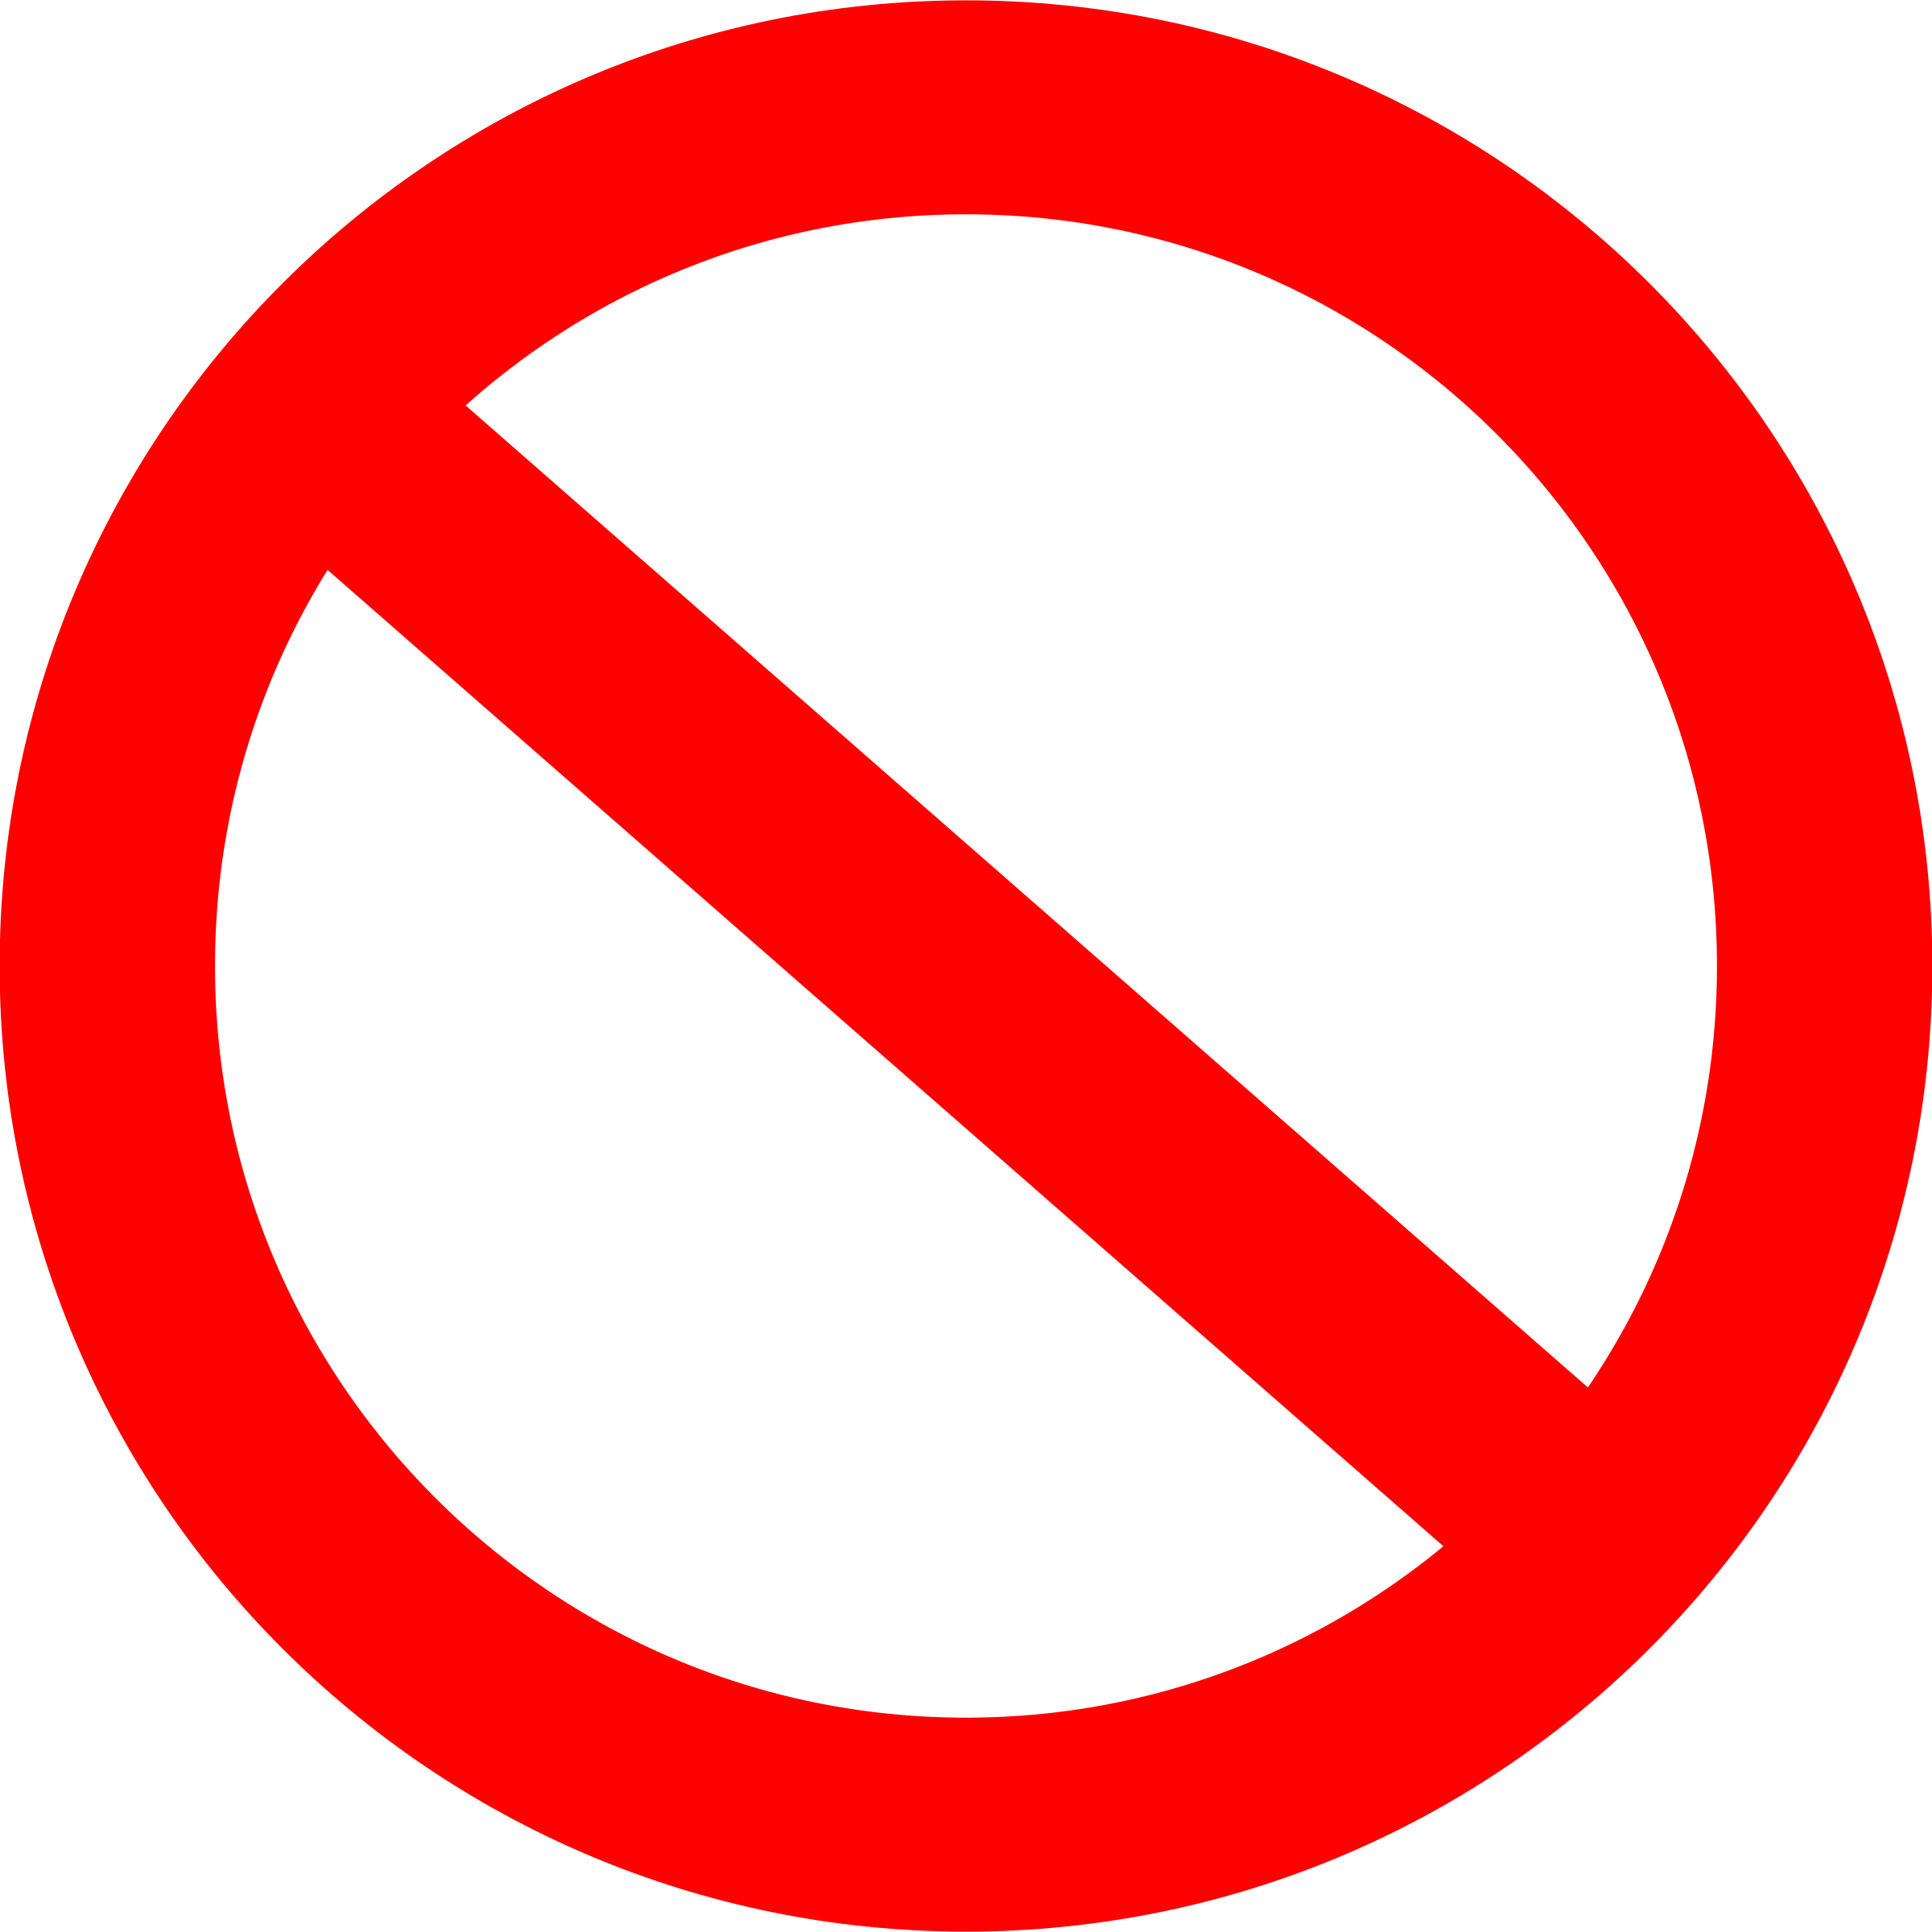 Panneau interdit / forbidden road sign basic Clip arts